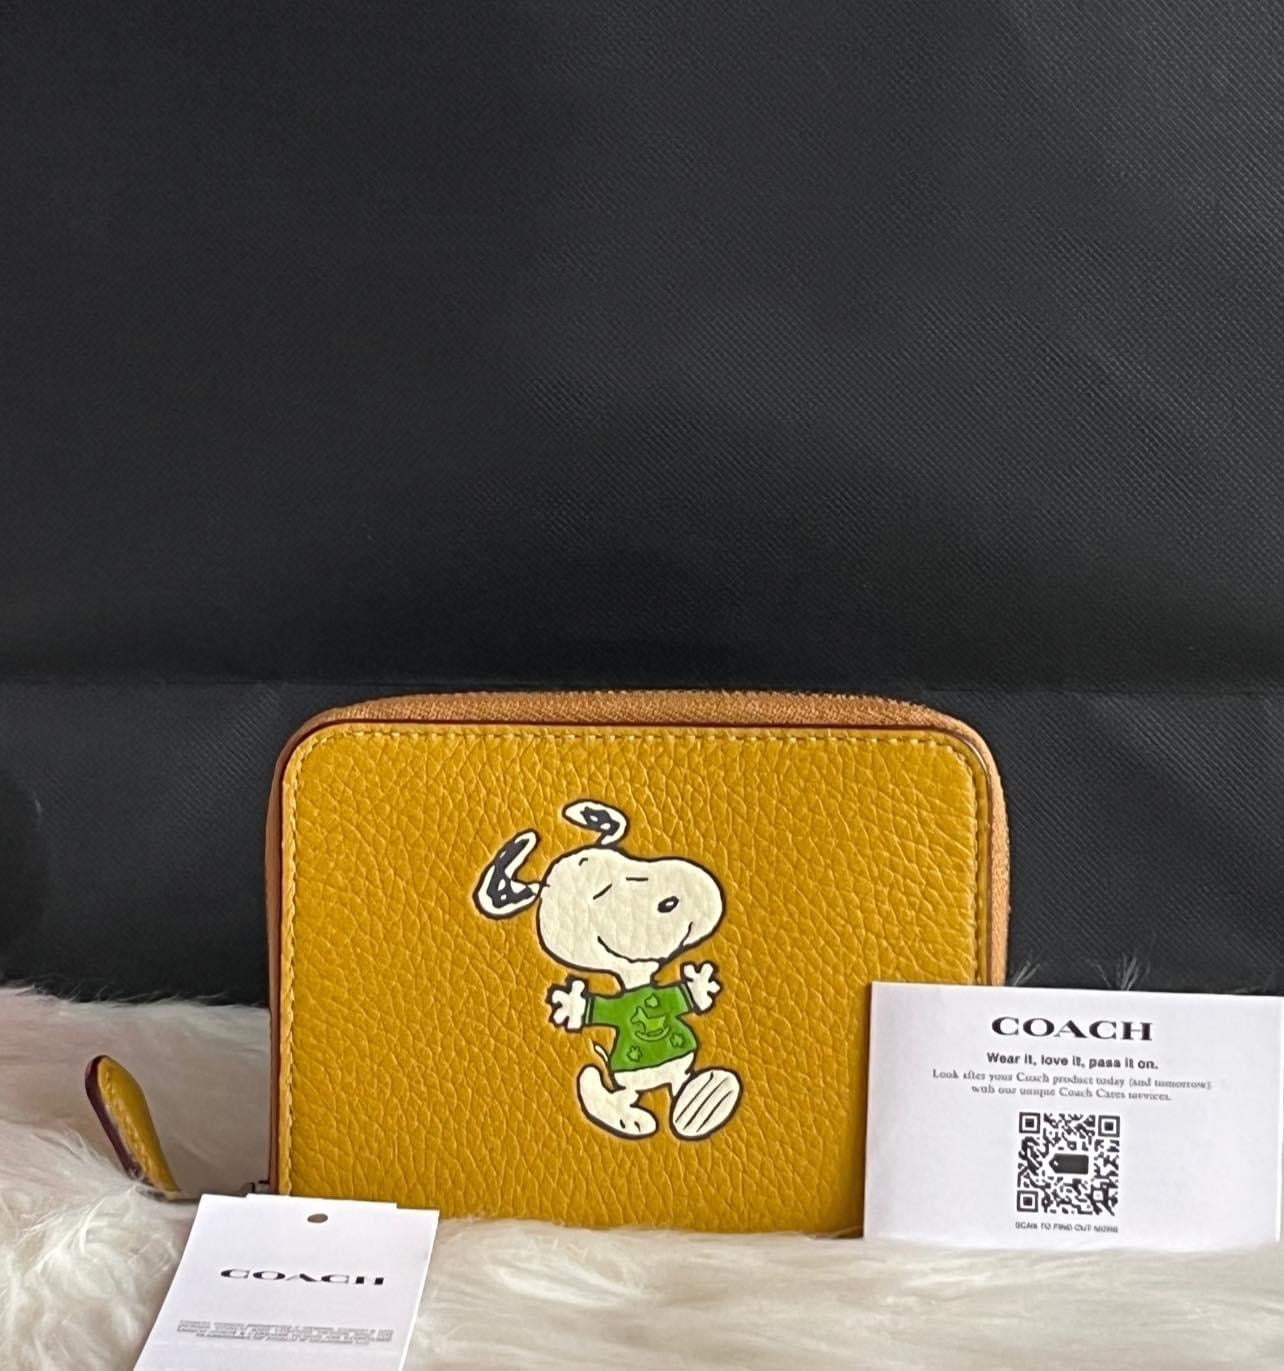 Coach X Peanuts Small Zip Around Wallet with Snoopy Walk Motif